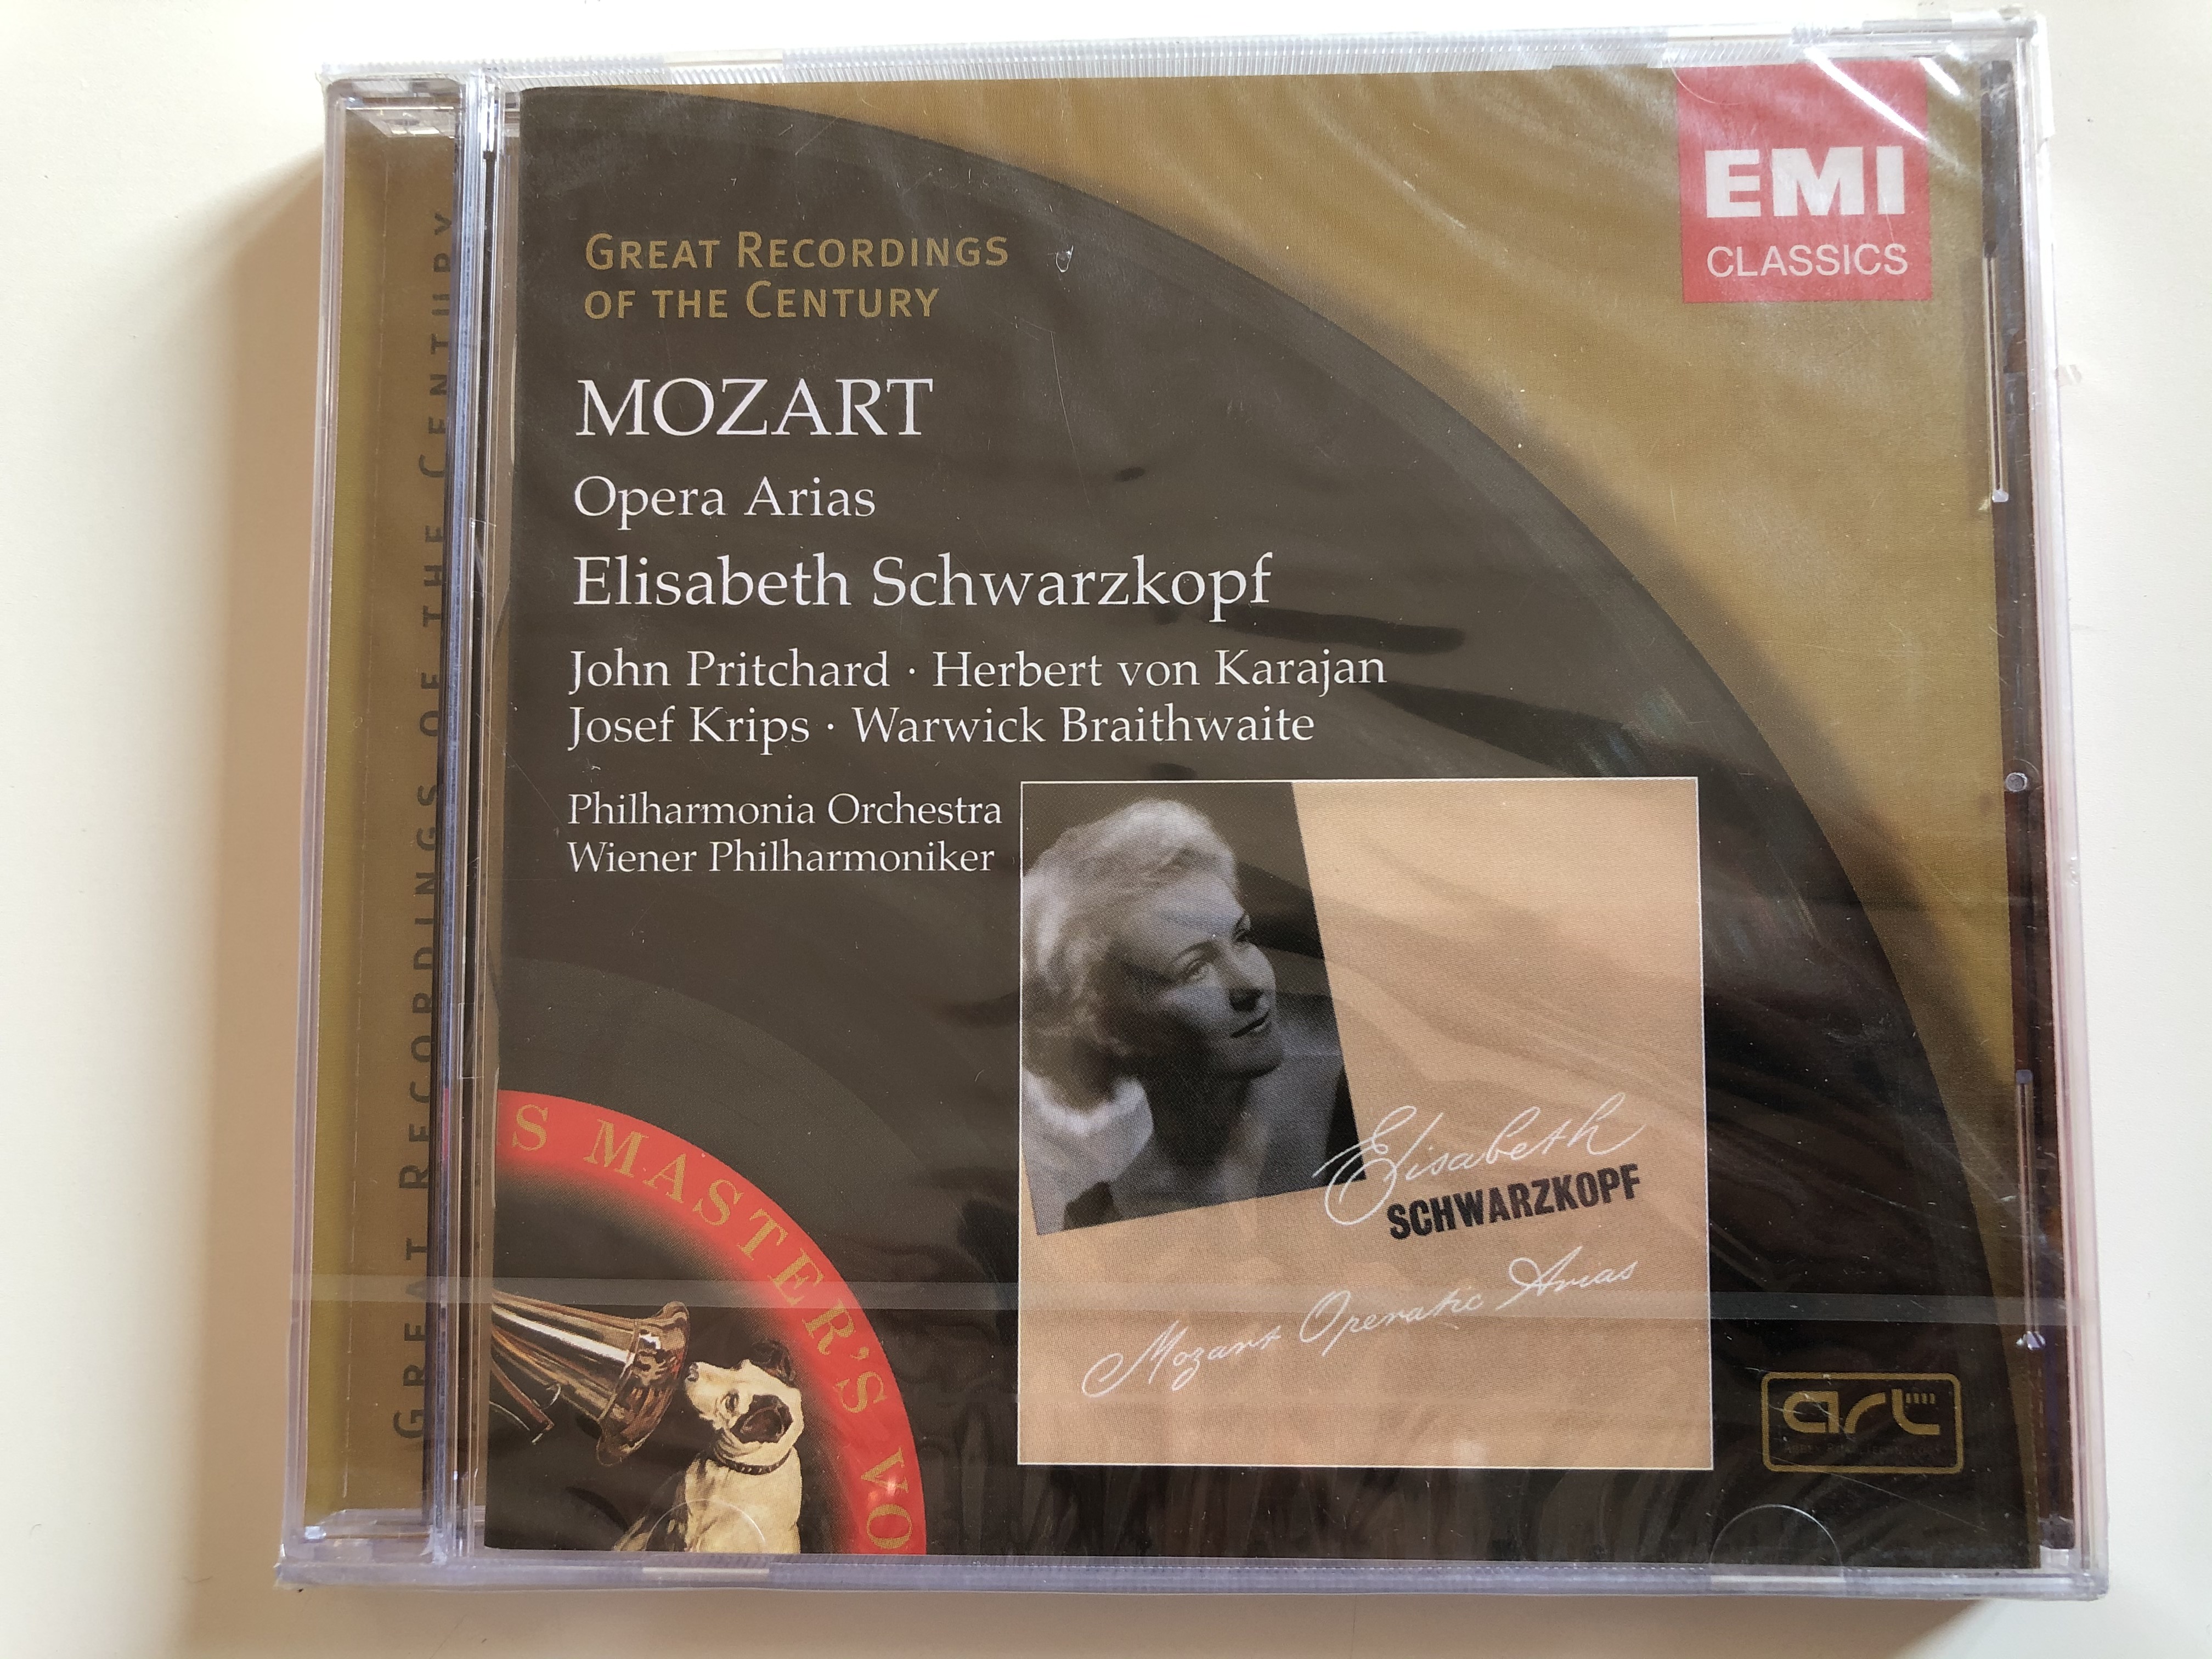 mozart-opera-arias-elisabeth-schwarzkopf-john-pritchard-herbert-von-karajan-josef-krips-warwick-braithwaite-philharmonia-orchestra-wiener-philharmoniker-great-recordings-of-the-centu-1-.jpg